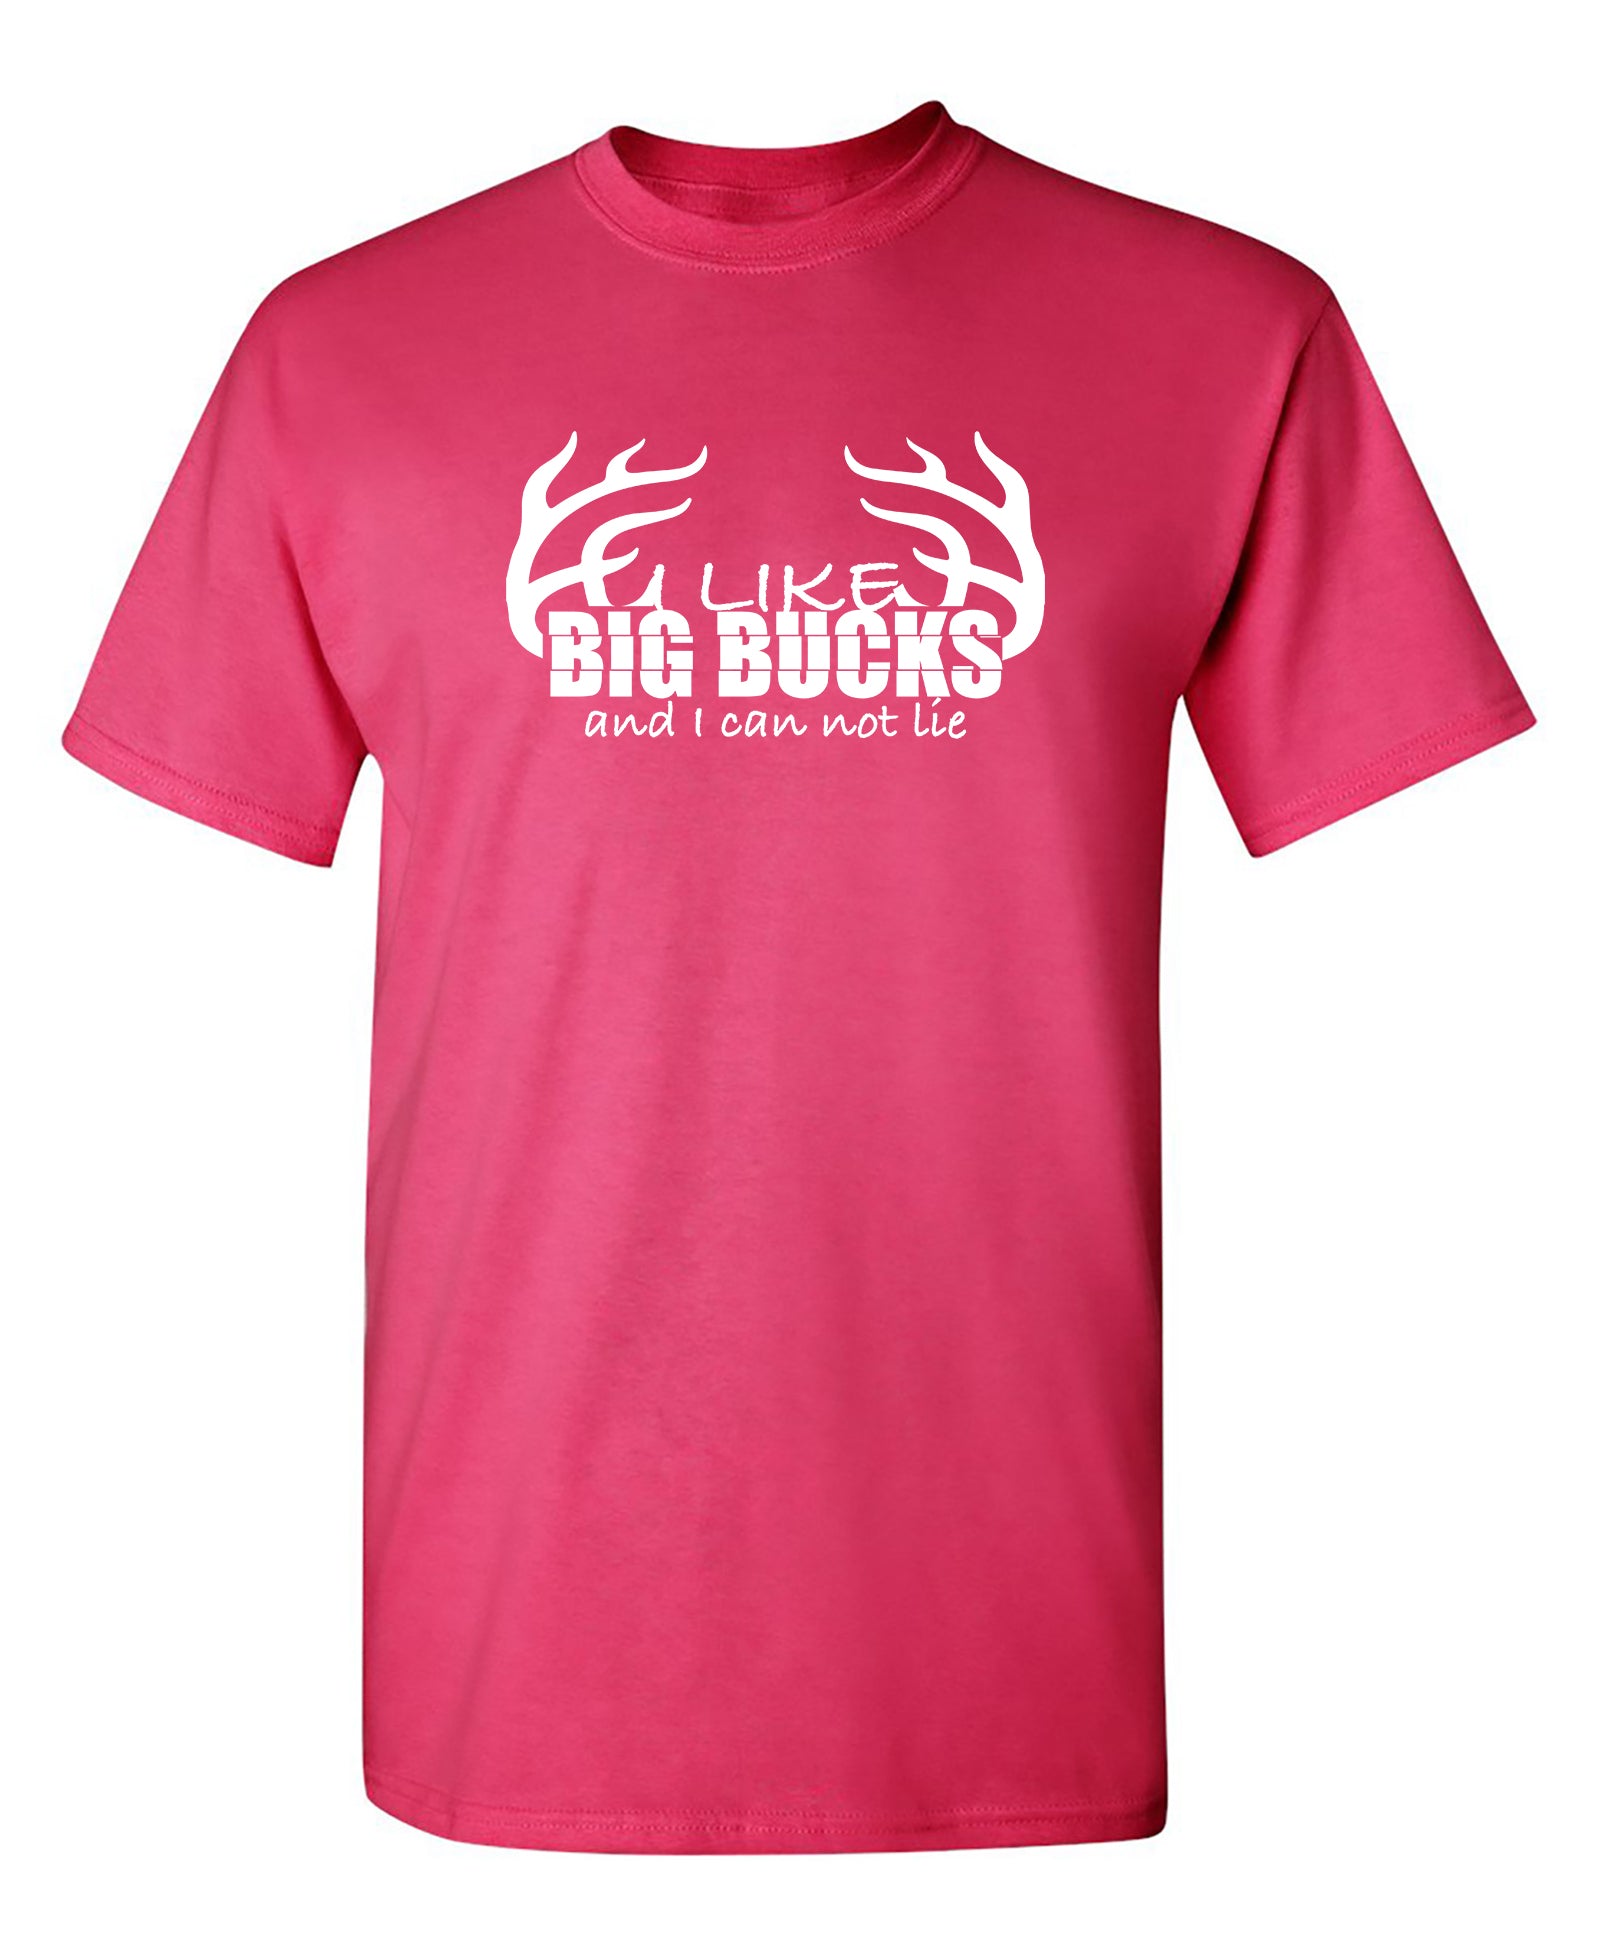 I like Big Bucks Shirt - Funny T Shirts & Graphic Tees